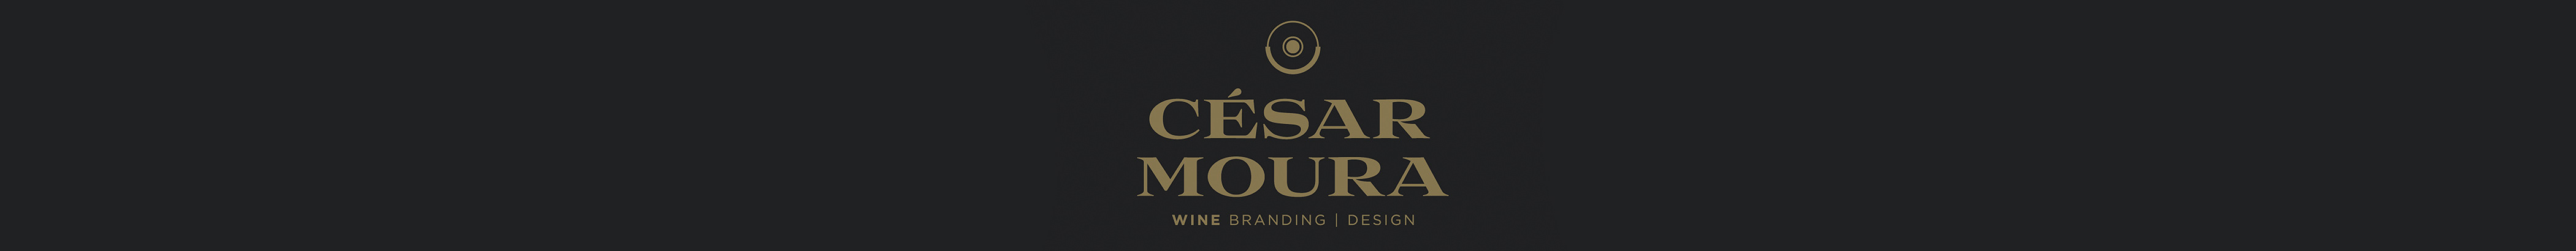 César Moura profil başlığı